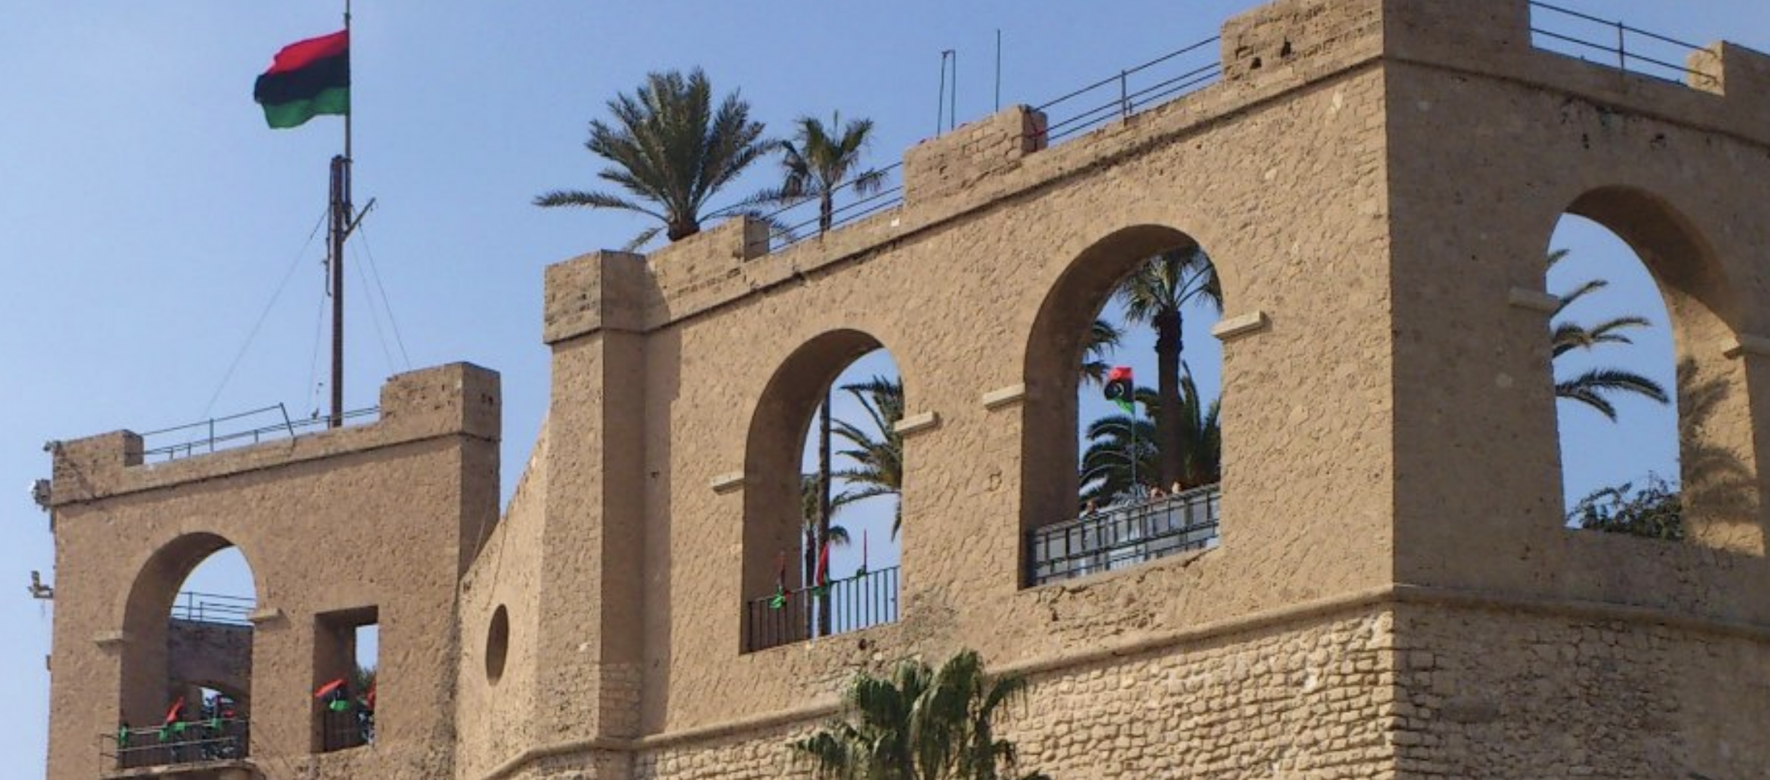 Libye : La France va réouvrir son ambassade à Tripoli dès le 29 mars